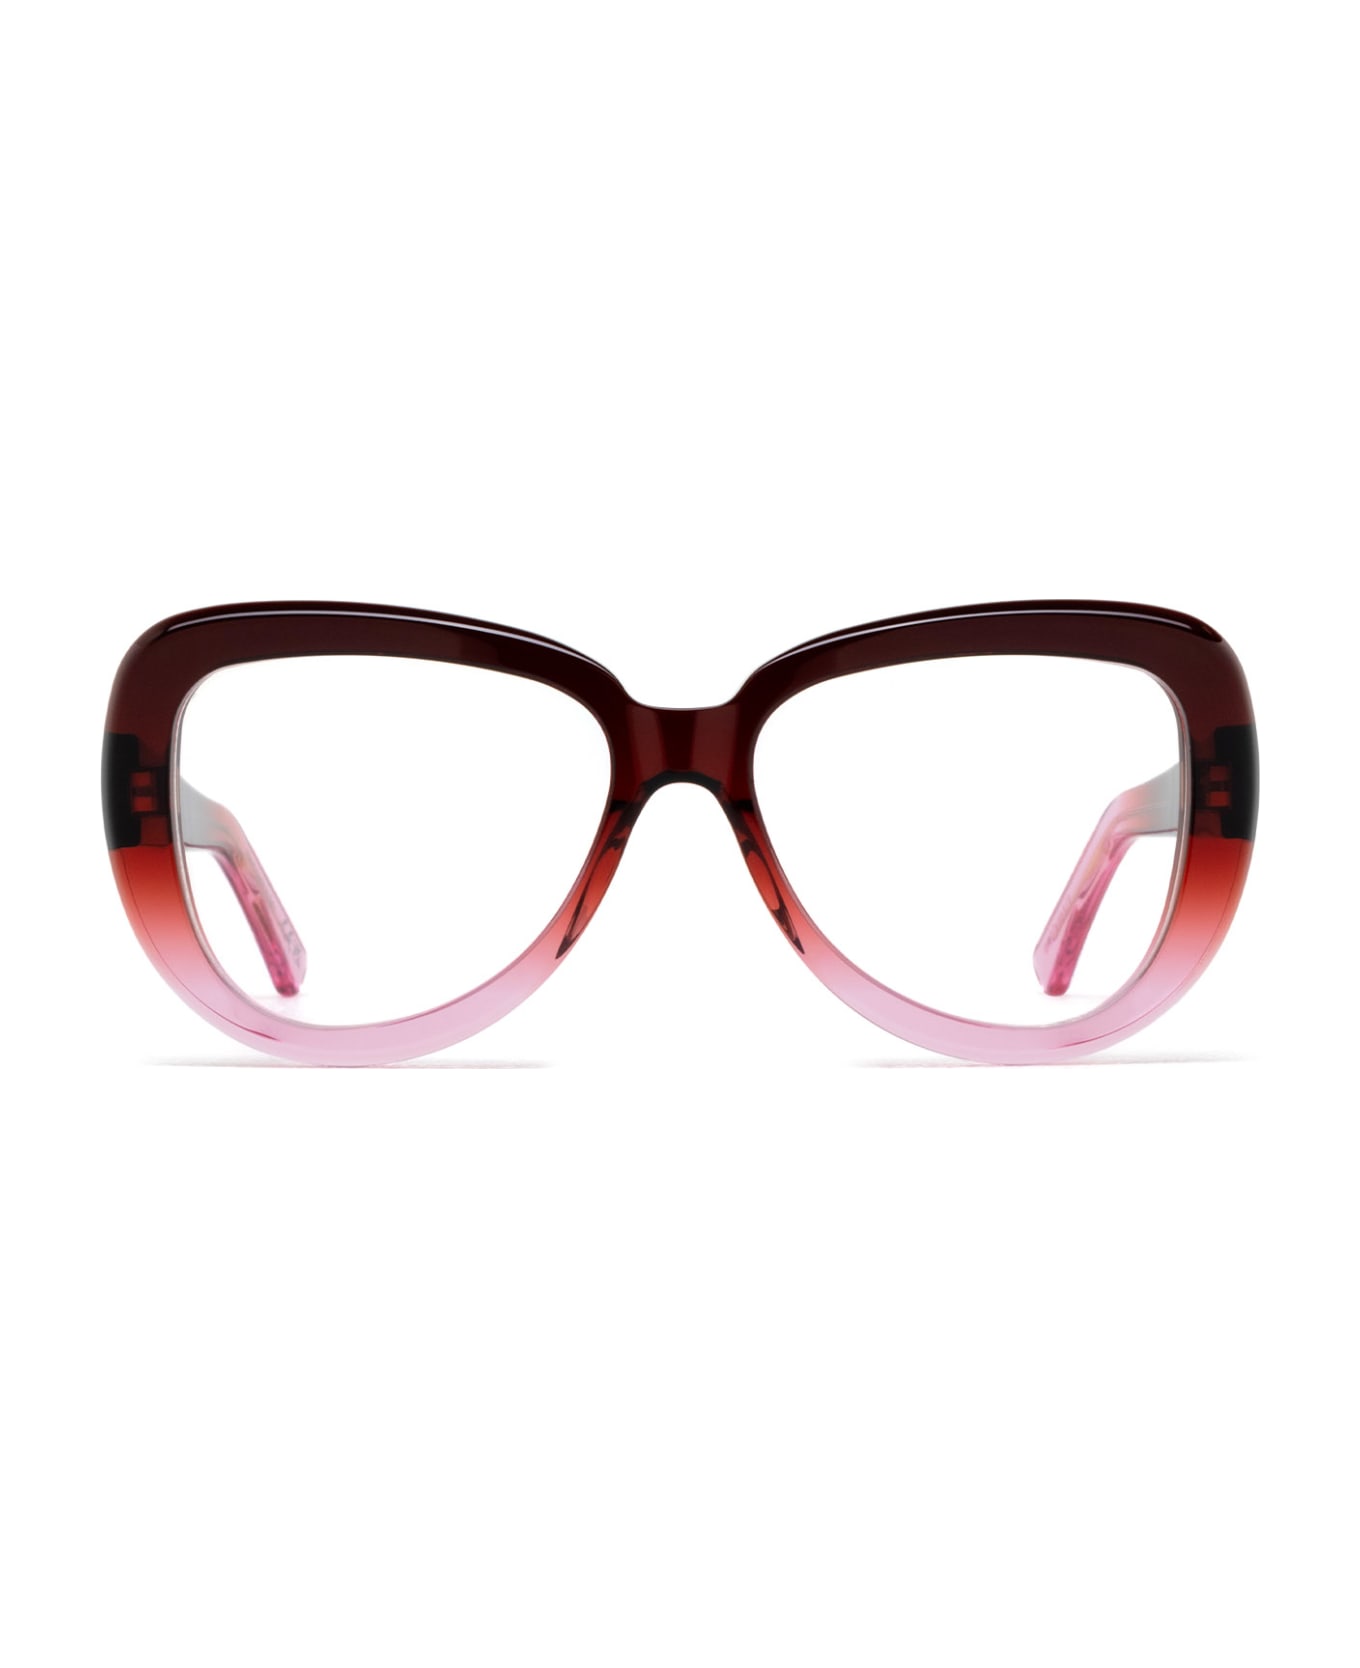 Marni Eyewear Elephant Island Opt Faded Burgundy Glasses - Faded Burgundy